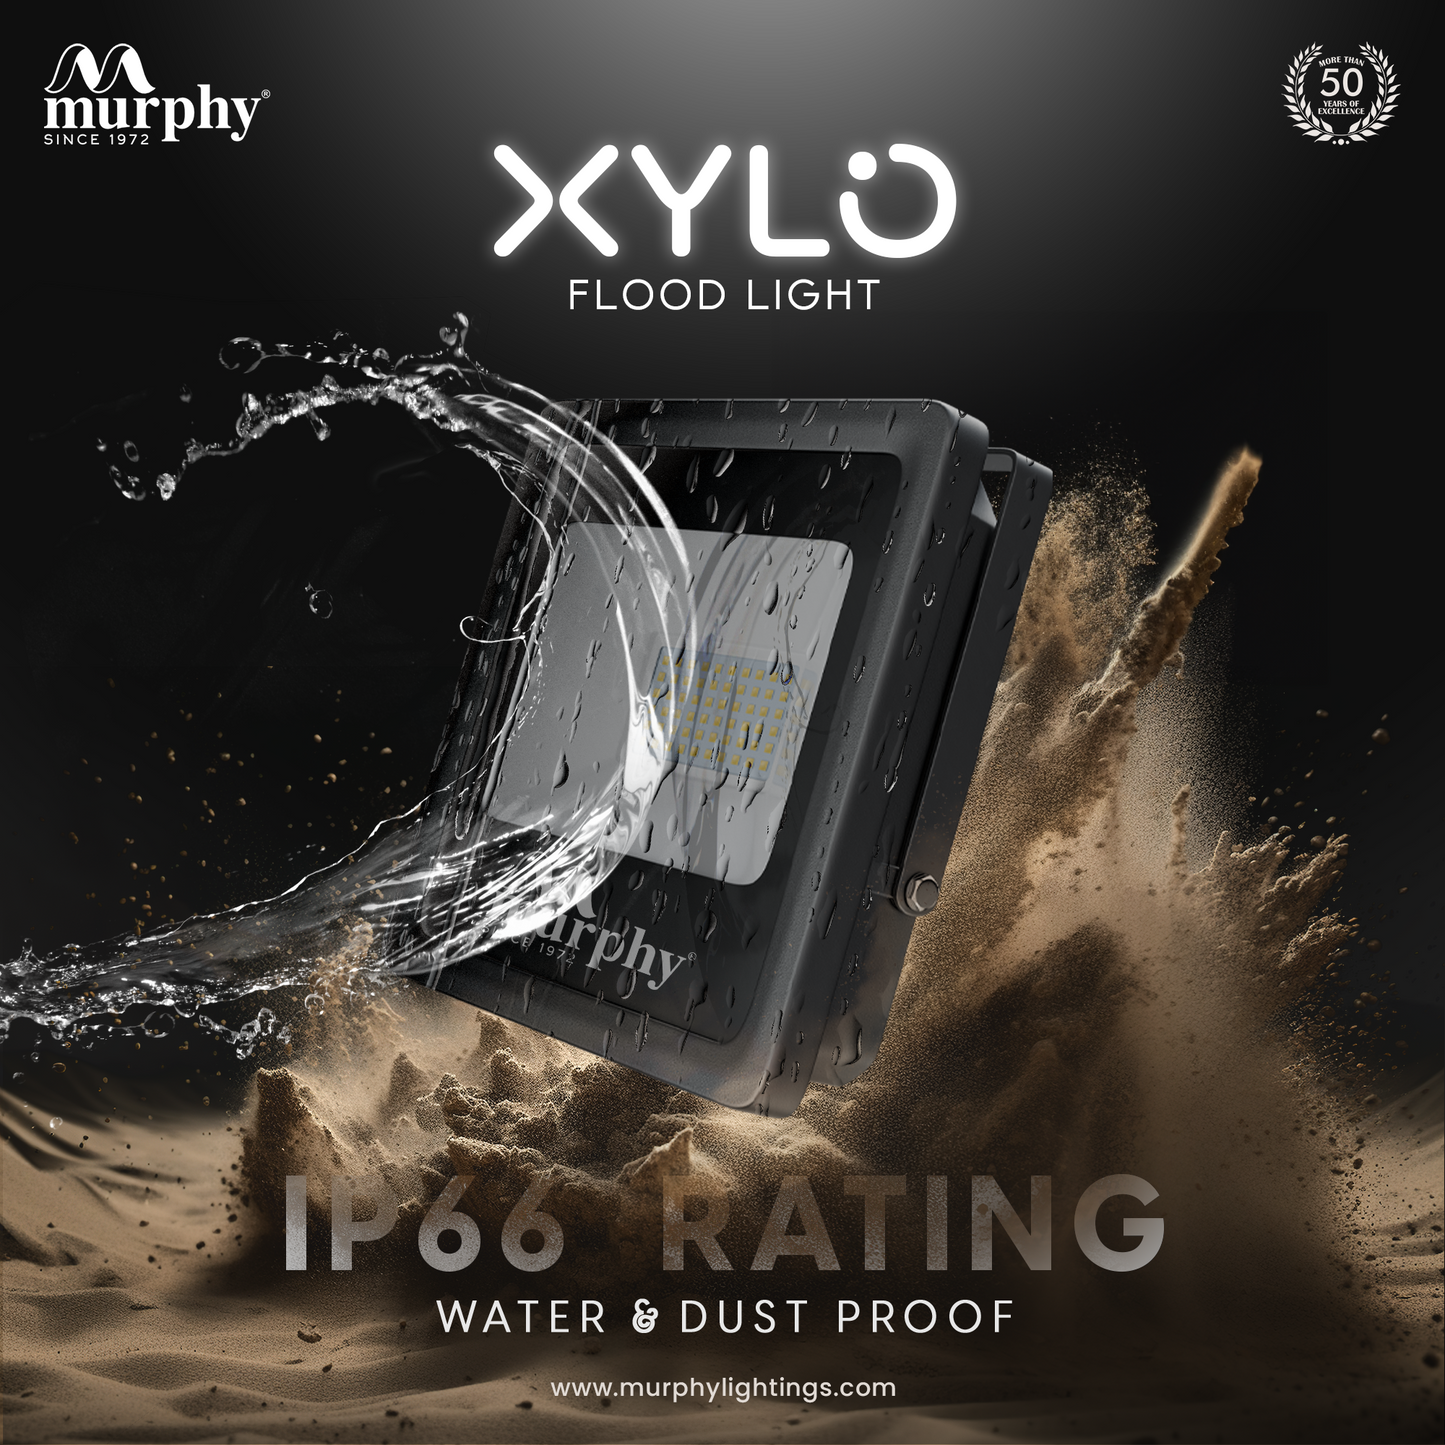 Murphy LED 30W Xylo Flood Light